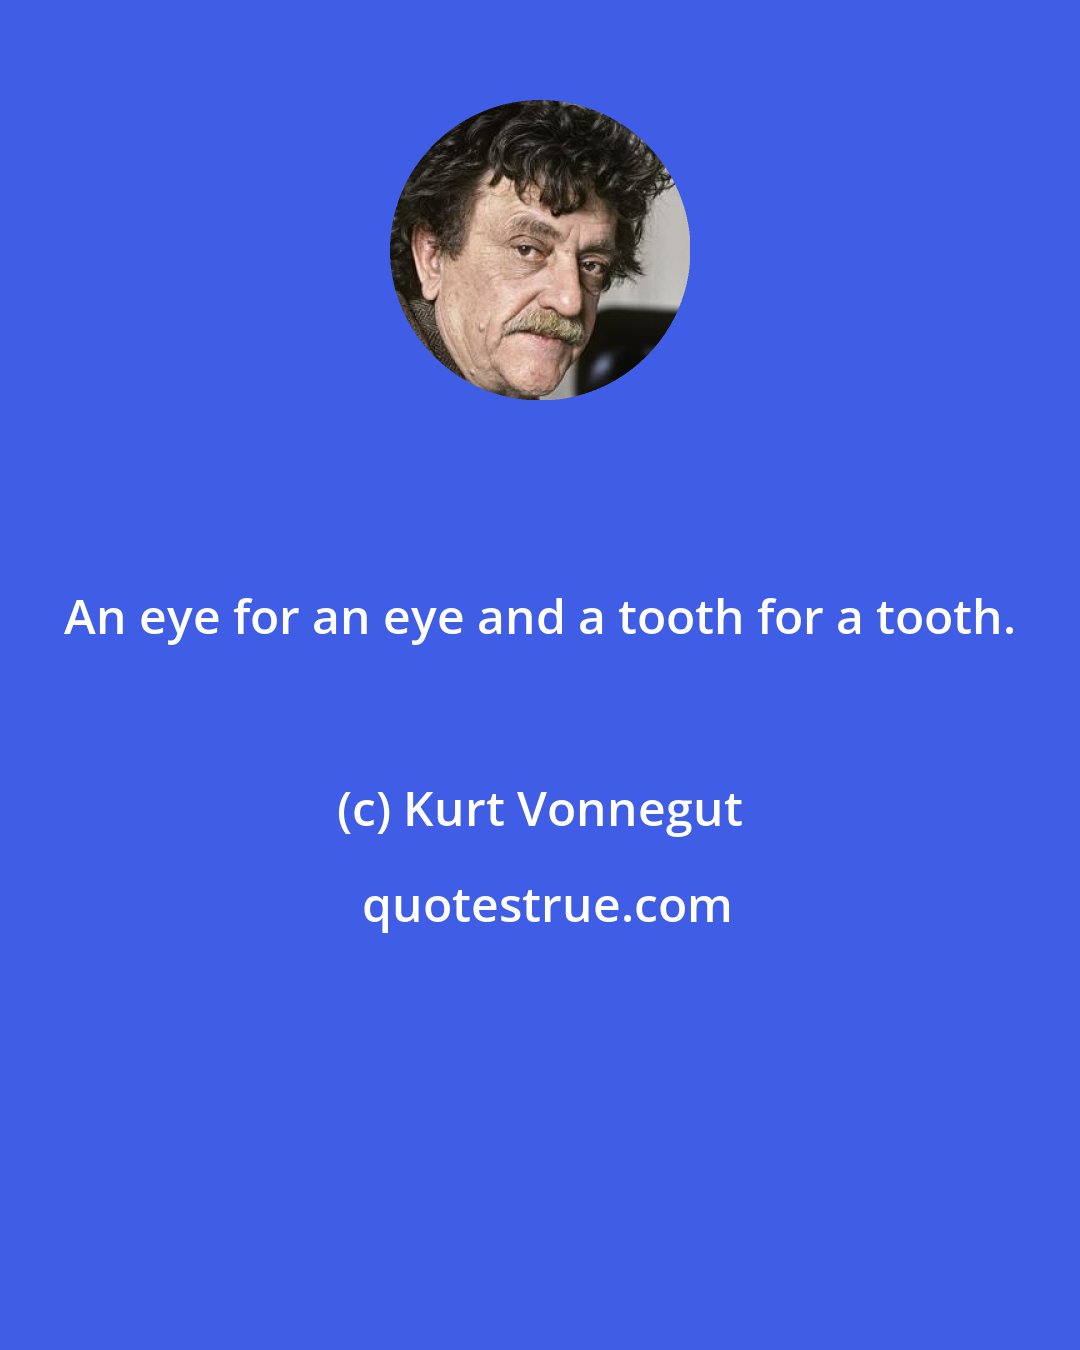 Kurt Vonnegut: An eye for an eye and a tooth for a tooth.